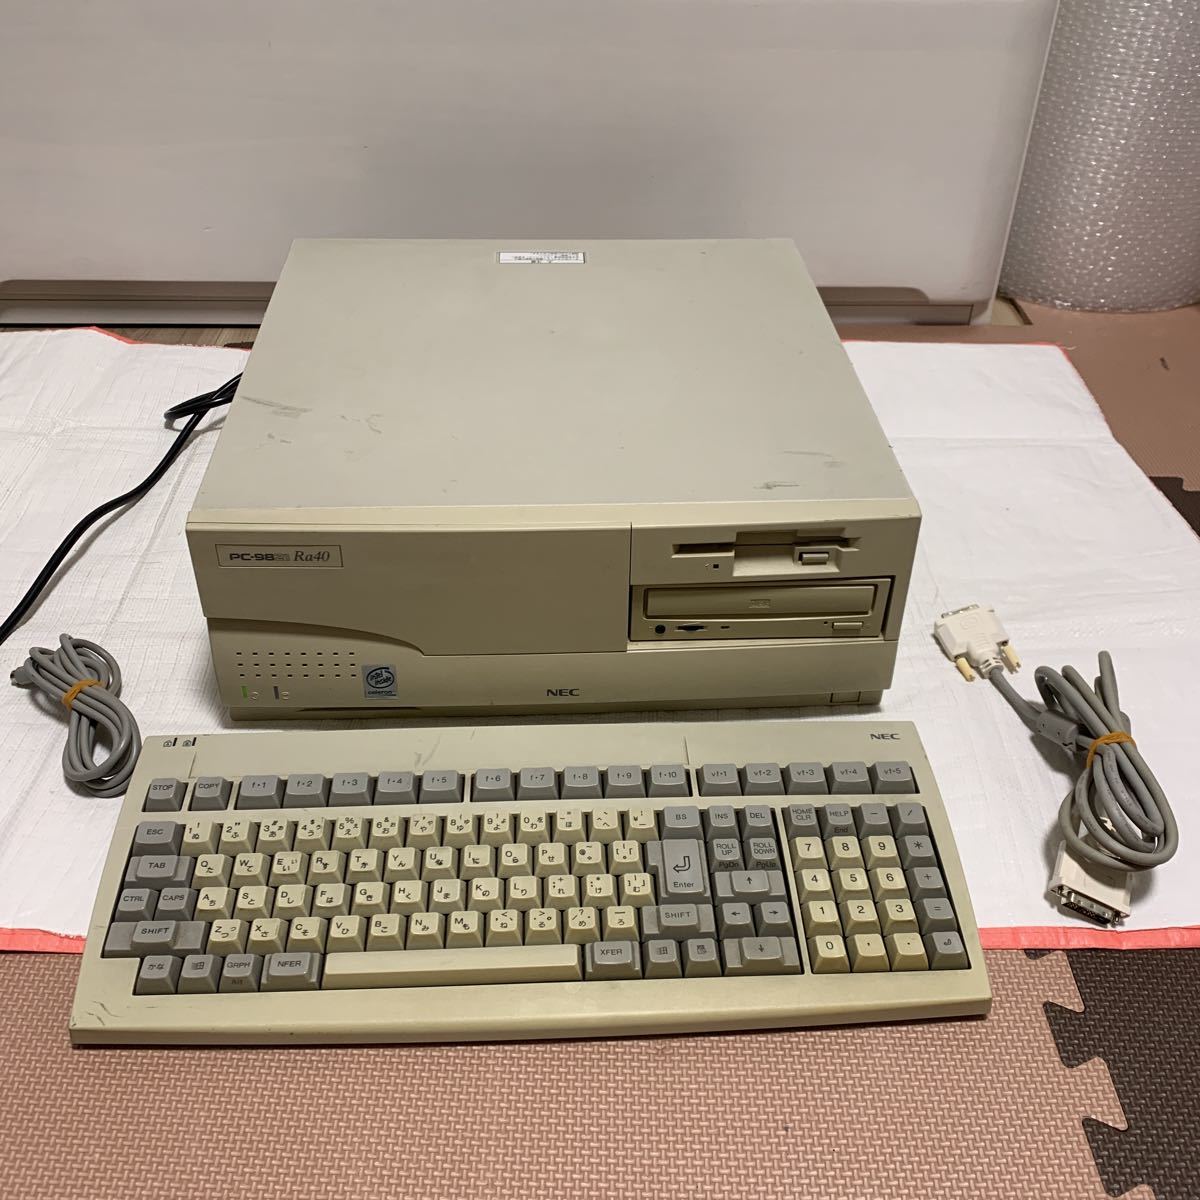 Yahoo!オークション - NEC パーソナルコンピューター PC-9821 Ra40...